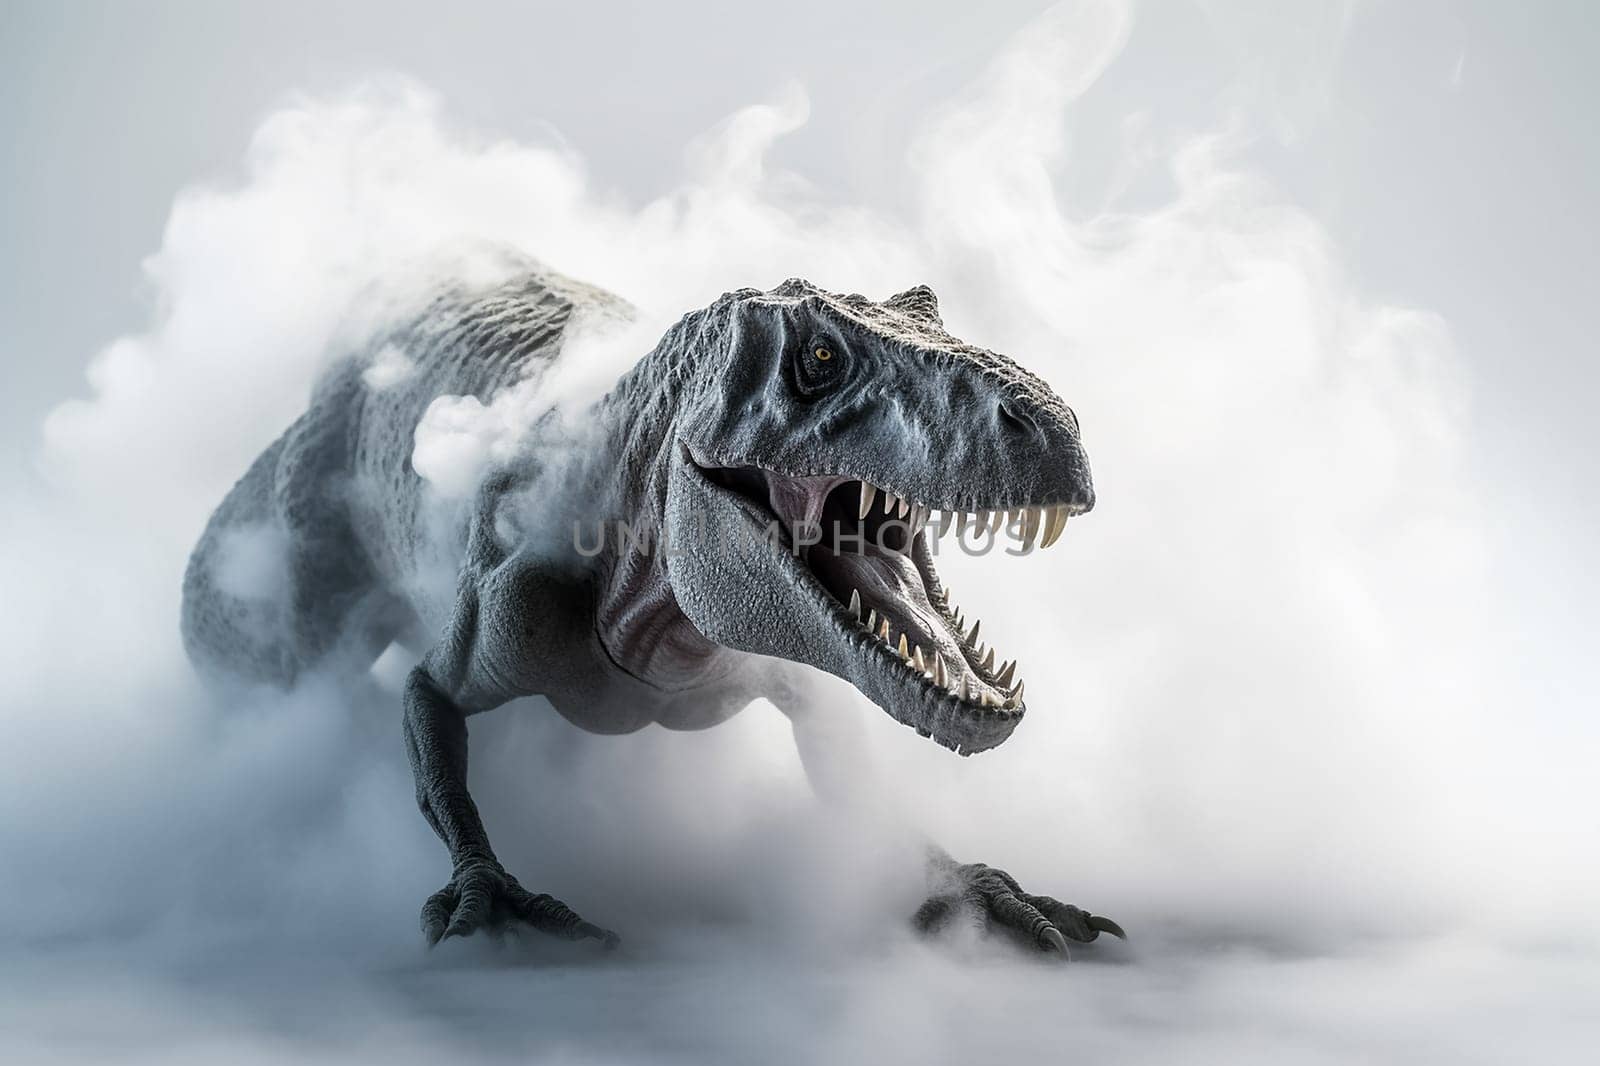 Scary big dinosaur in fog or mist. Big gray dinosaur in smoke or steam on light gray background by esvetleishaya